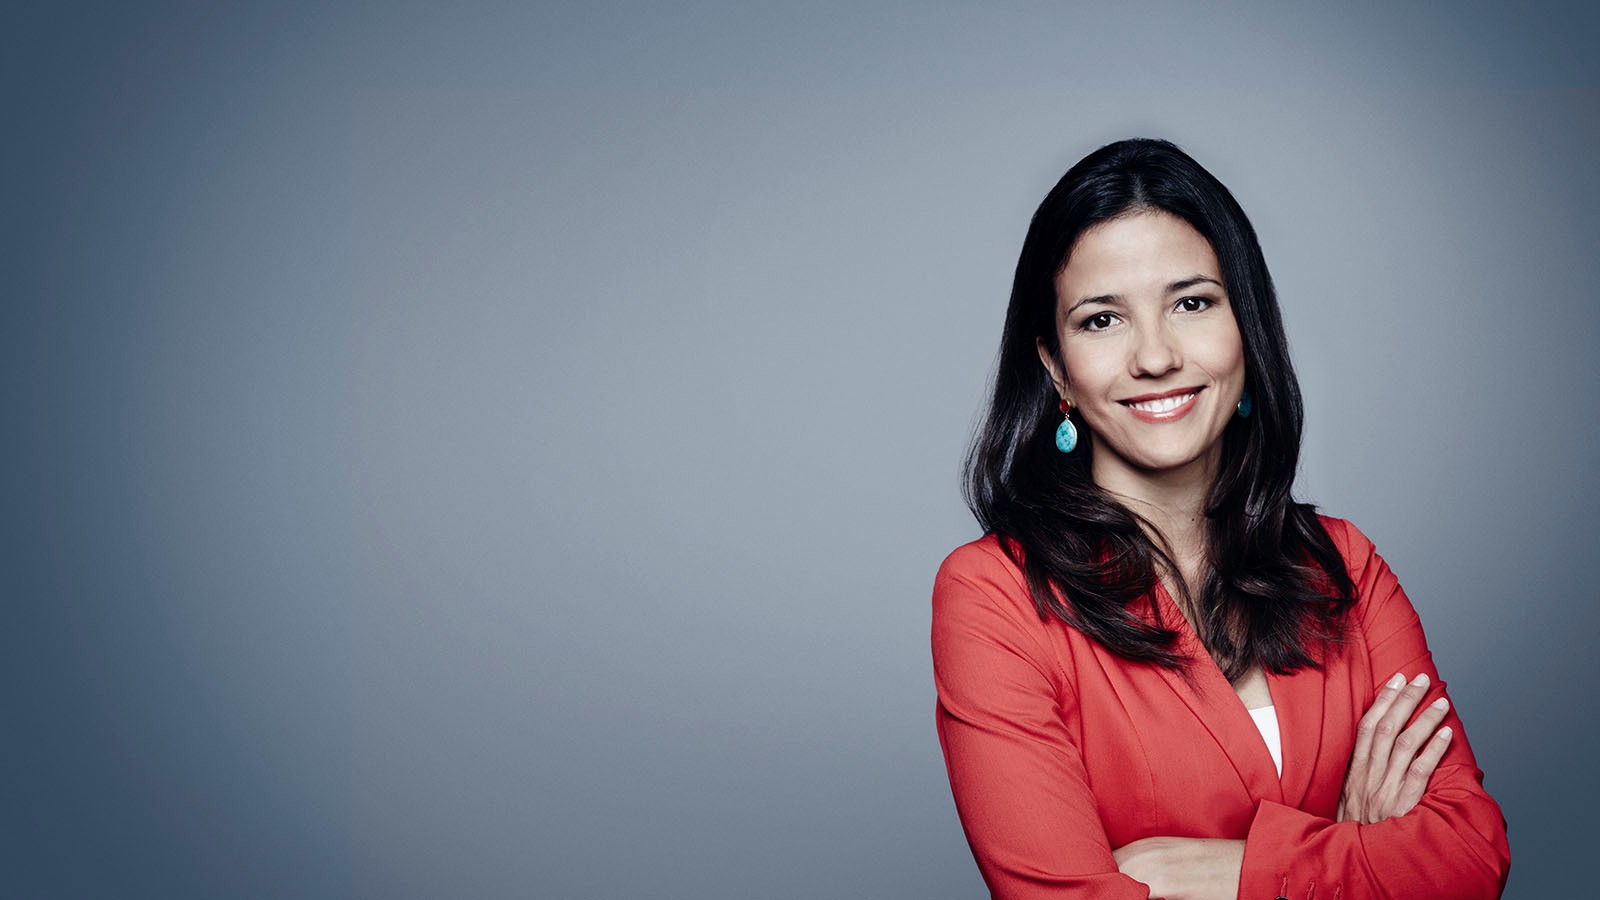 CNN Profiles - Isa Soares - Anchor and Correspondent - CNN1600 x 900